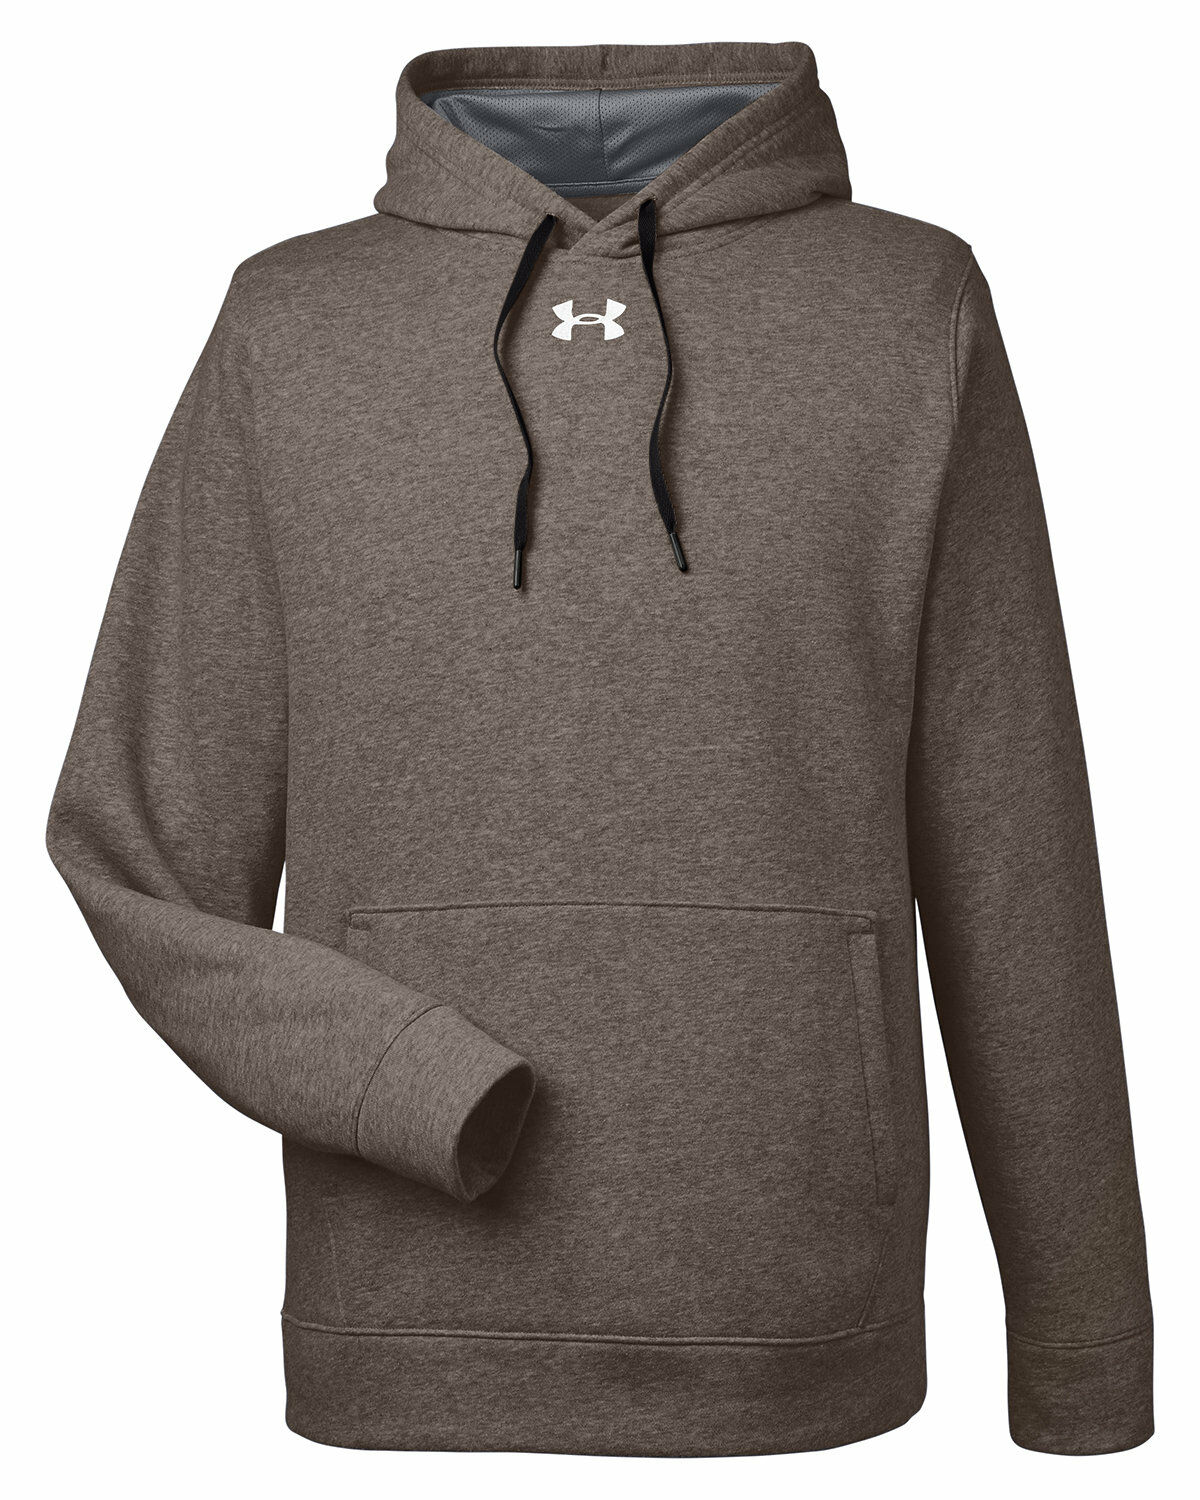 Branded Under Armour Men’s Hustle Pullover Hooded Sweatshirt Carbon Heather/Grey